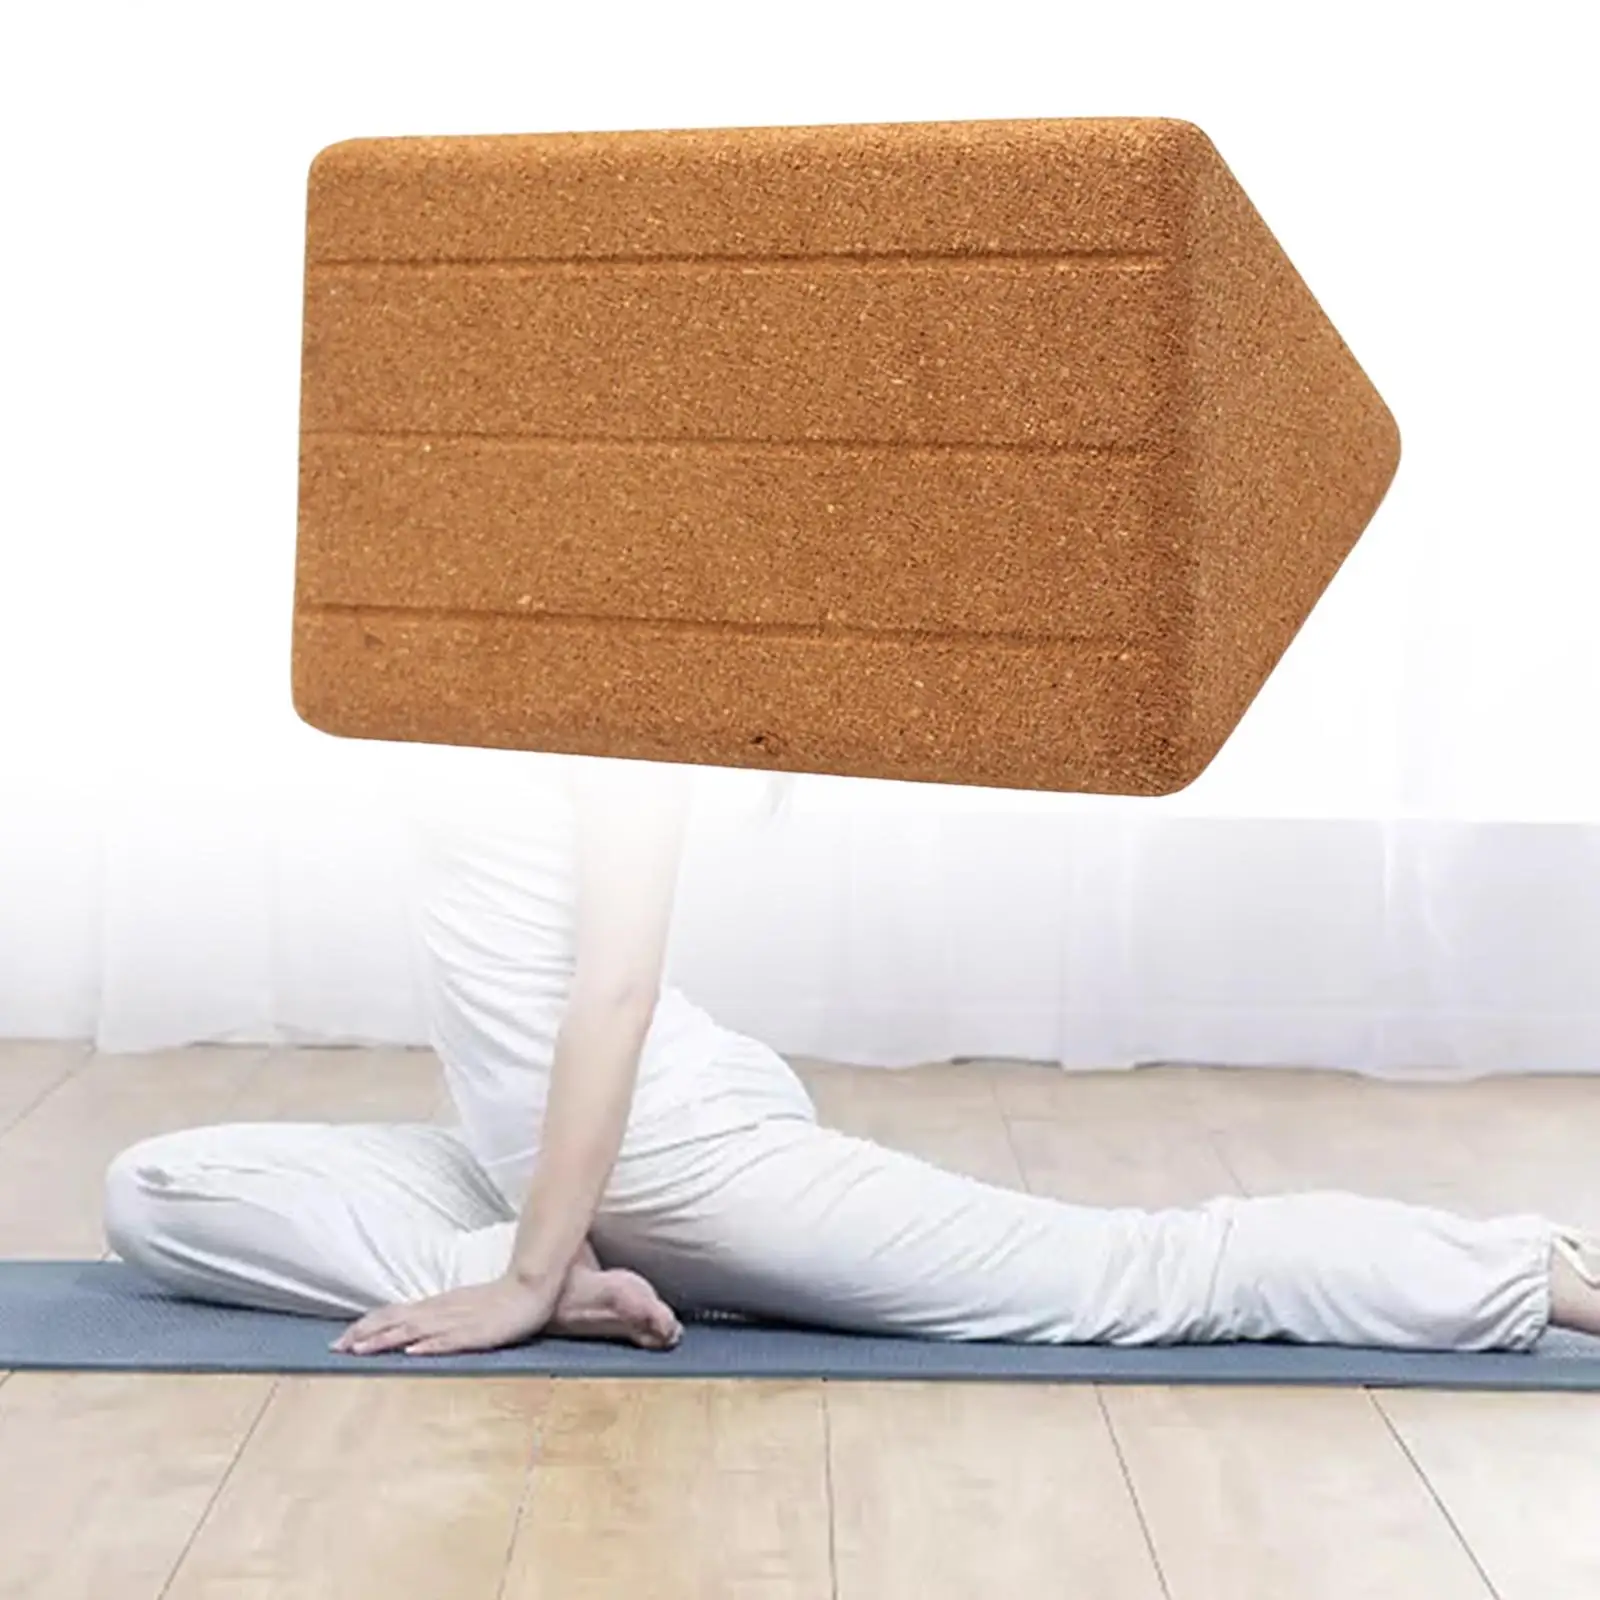 Yoga Block Non Slip Lightweight Yoga Brick for Balance Training